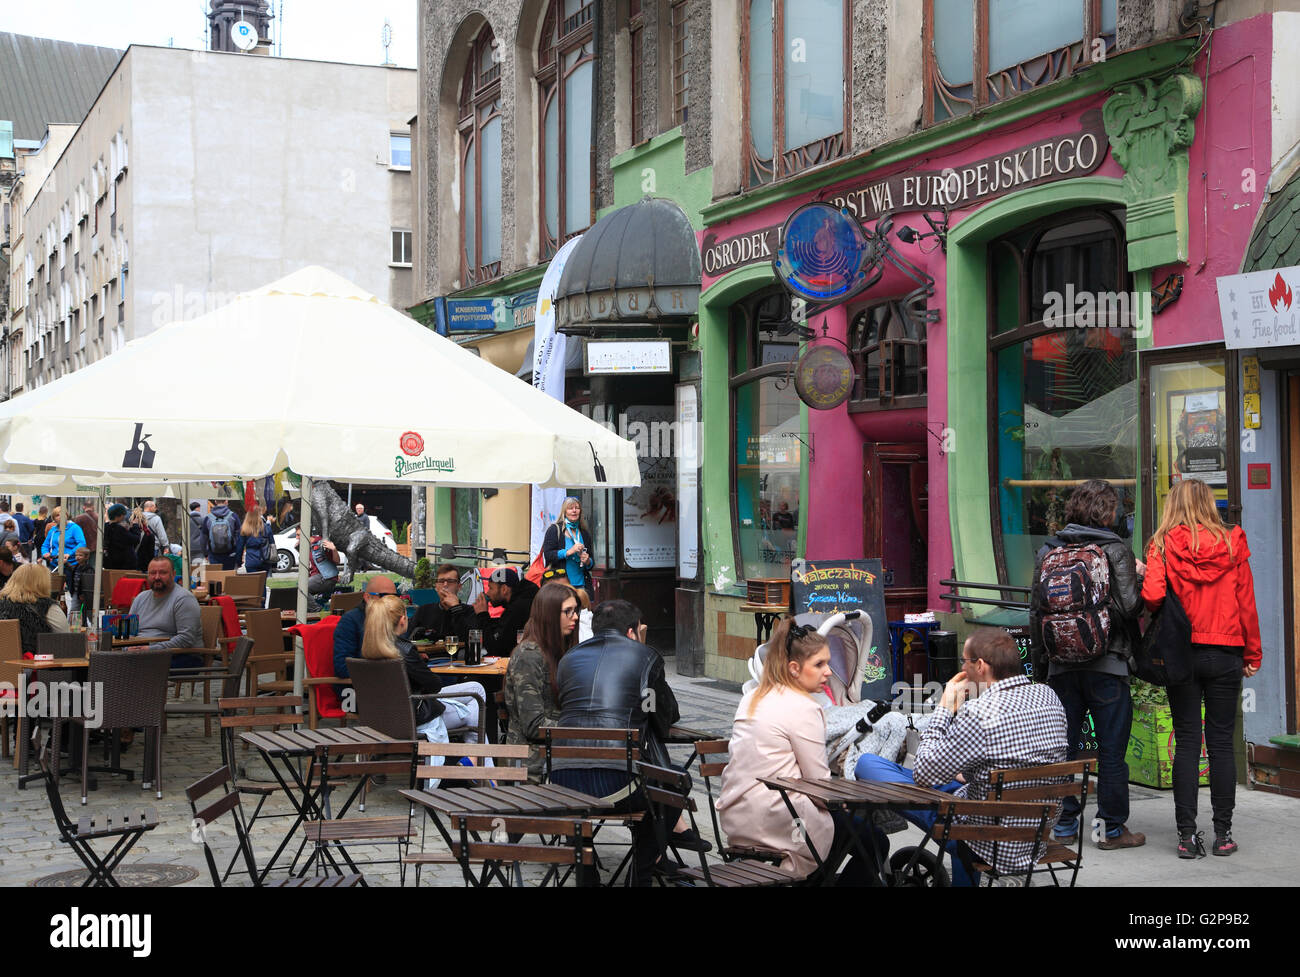 Art cafe e bar Kalambur, Wroclaw, Slesia, Polonia, Europa Foto Stock